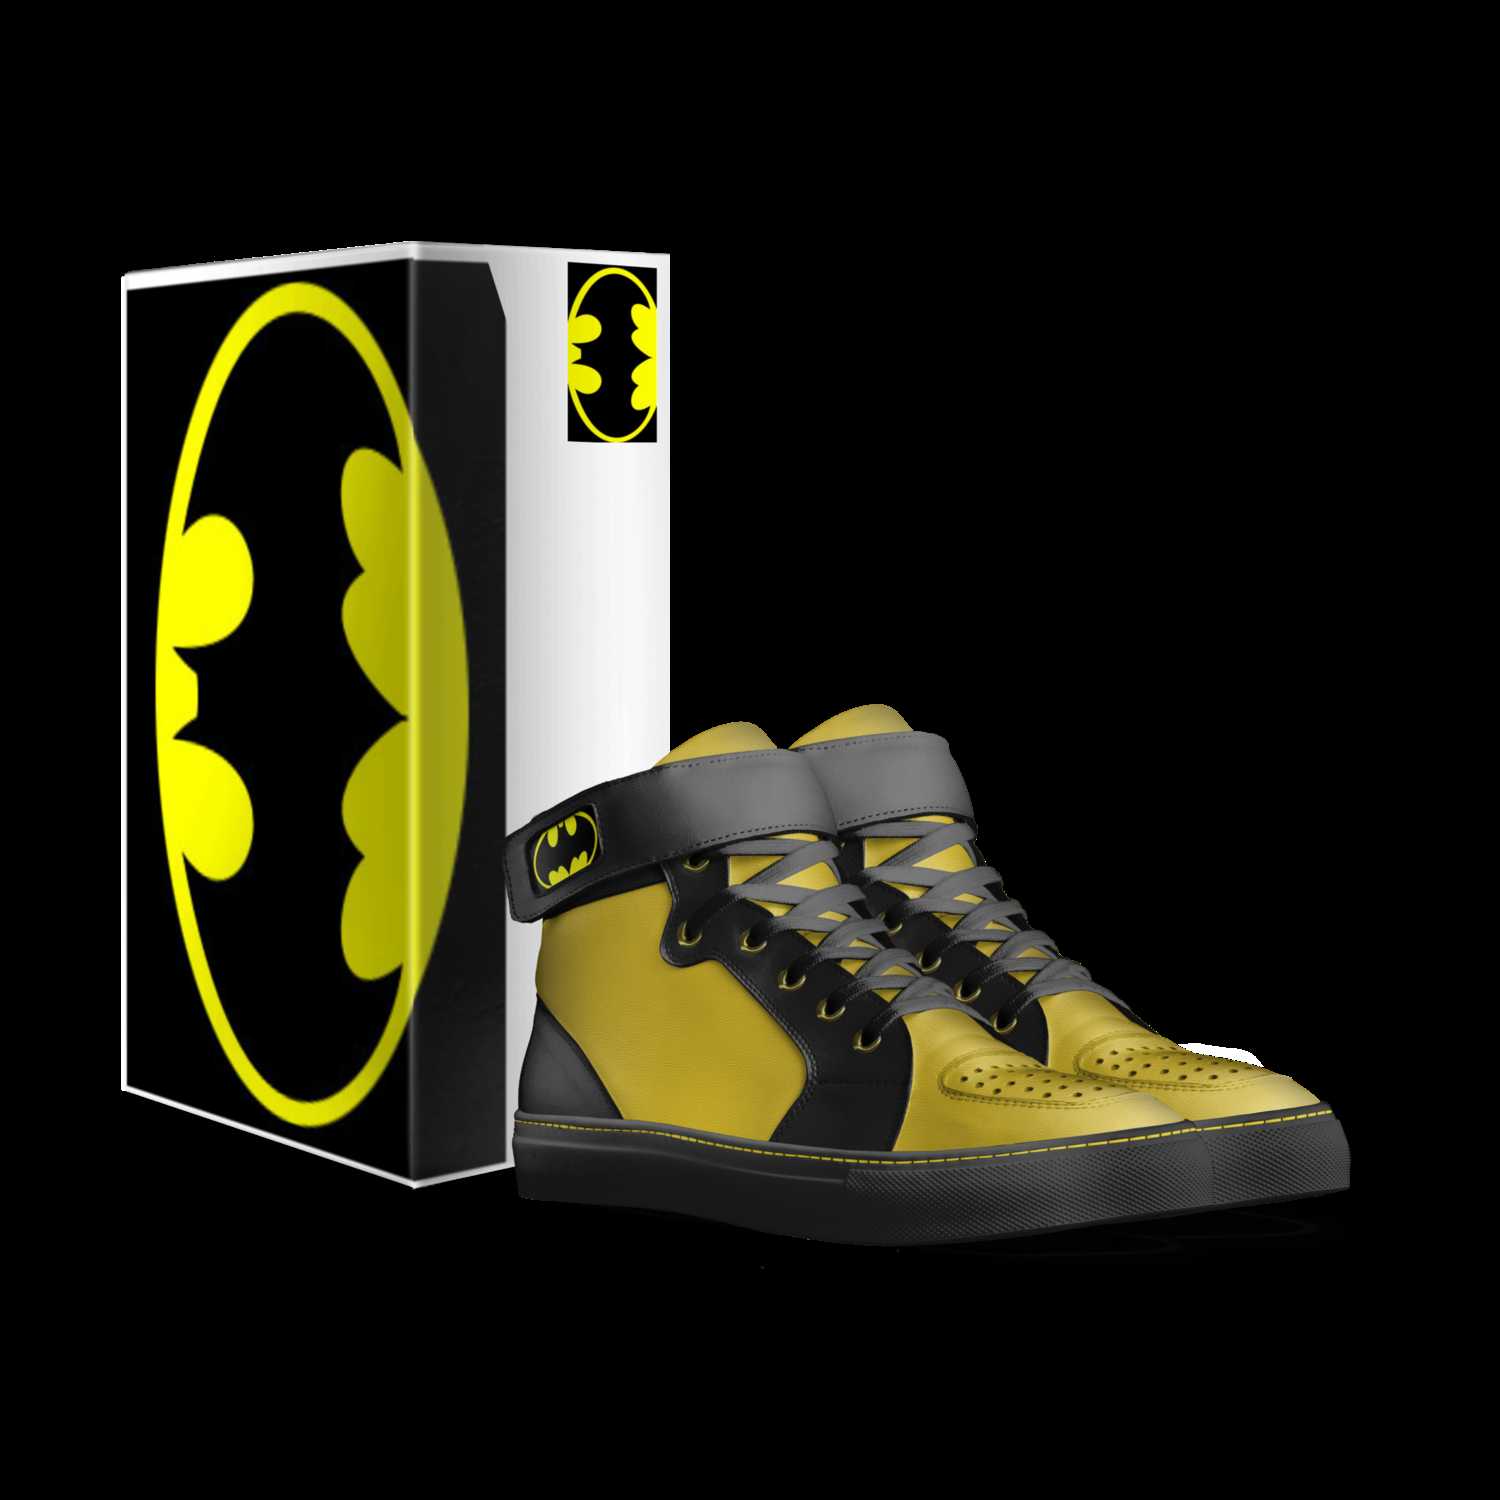 Batman | A Custom Shoe concept by Ryan Pack